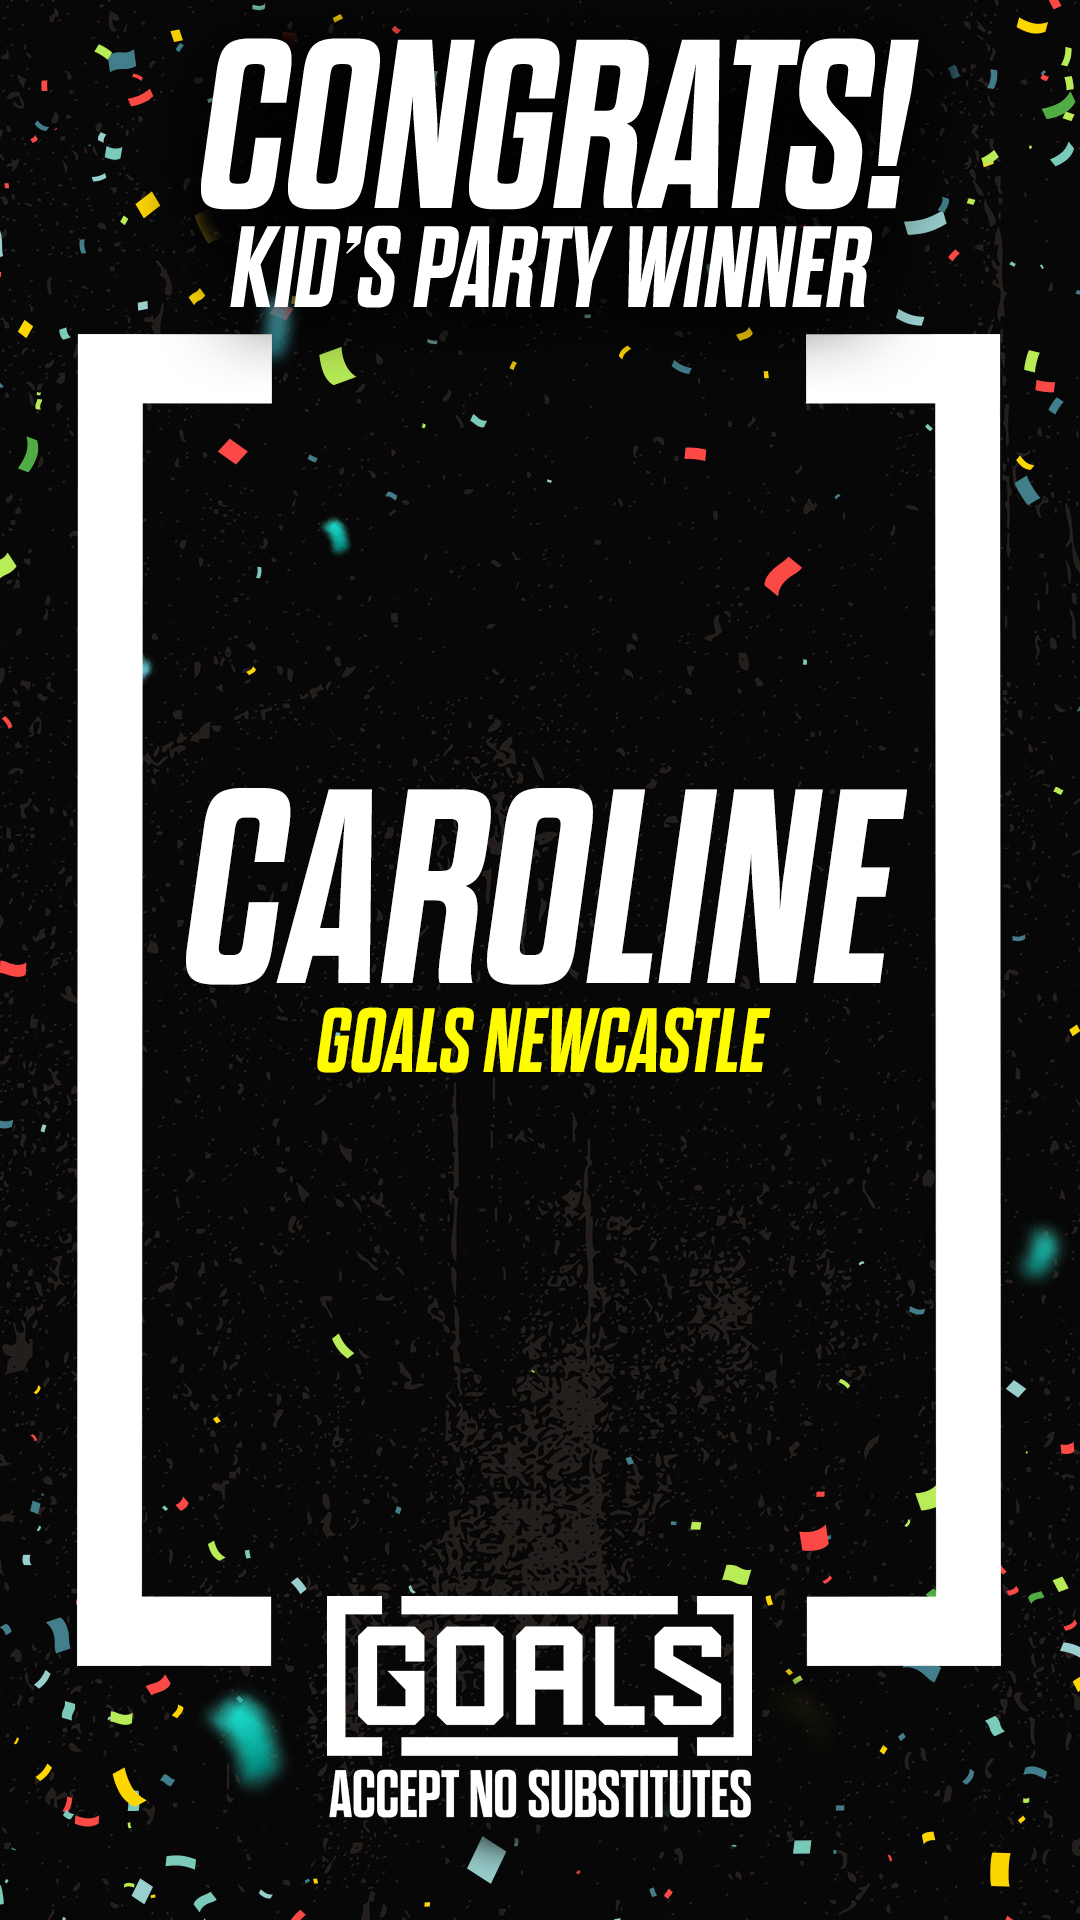 CAROLINE'S A WINNER Image